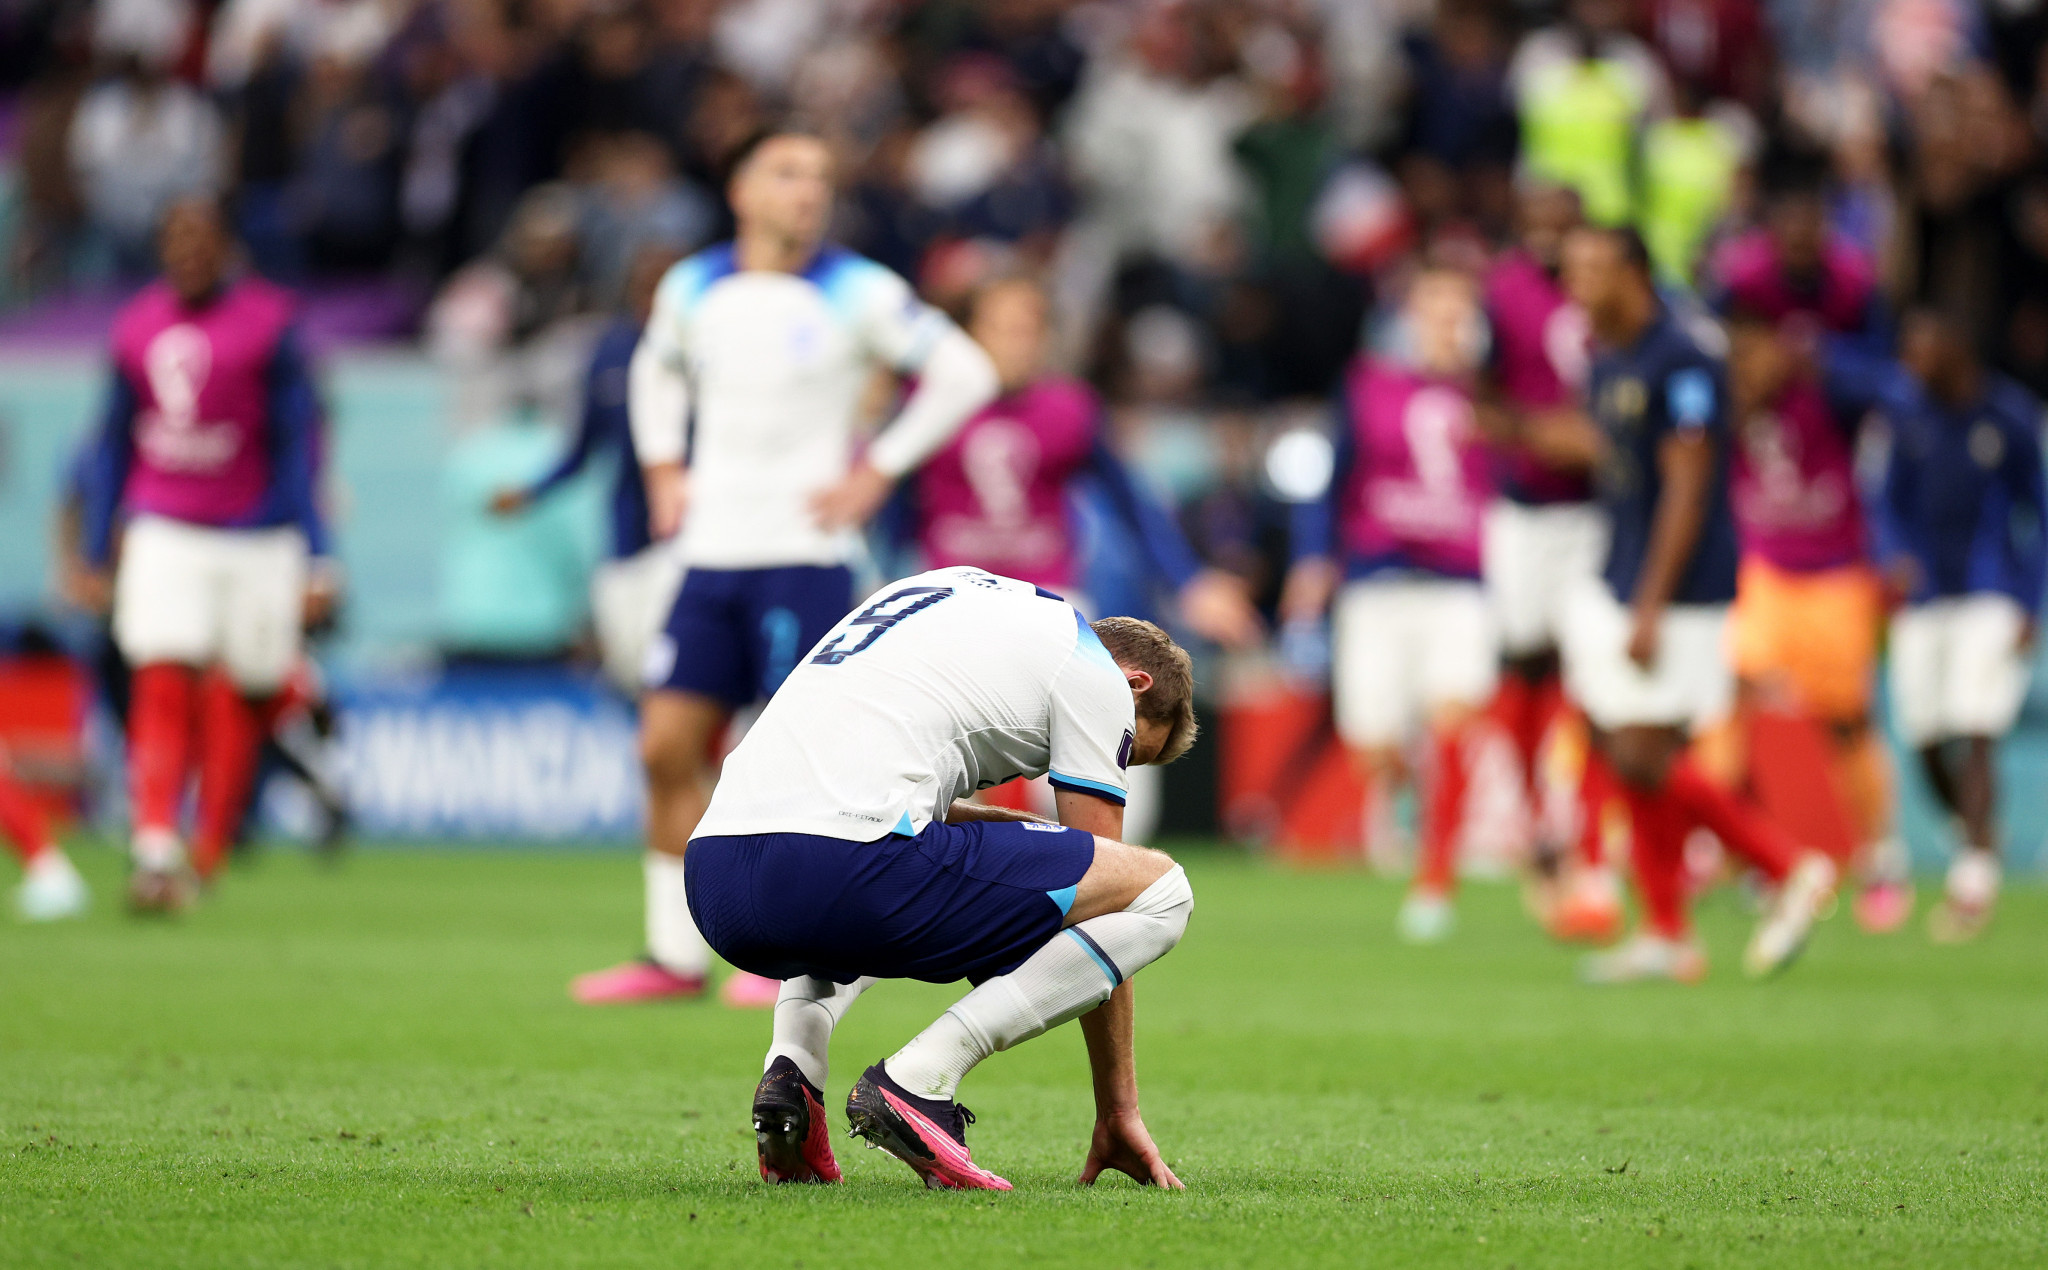 England taste new flavour of penalty heartbreak as France reach FIFA World Cup final four